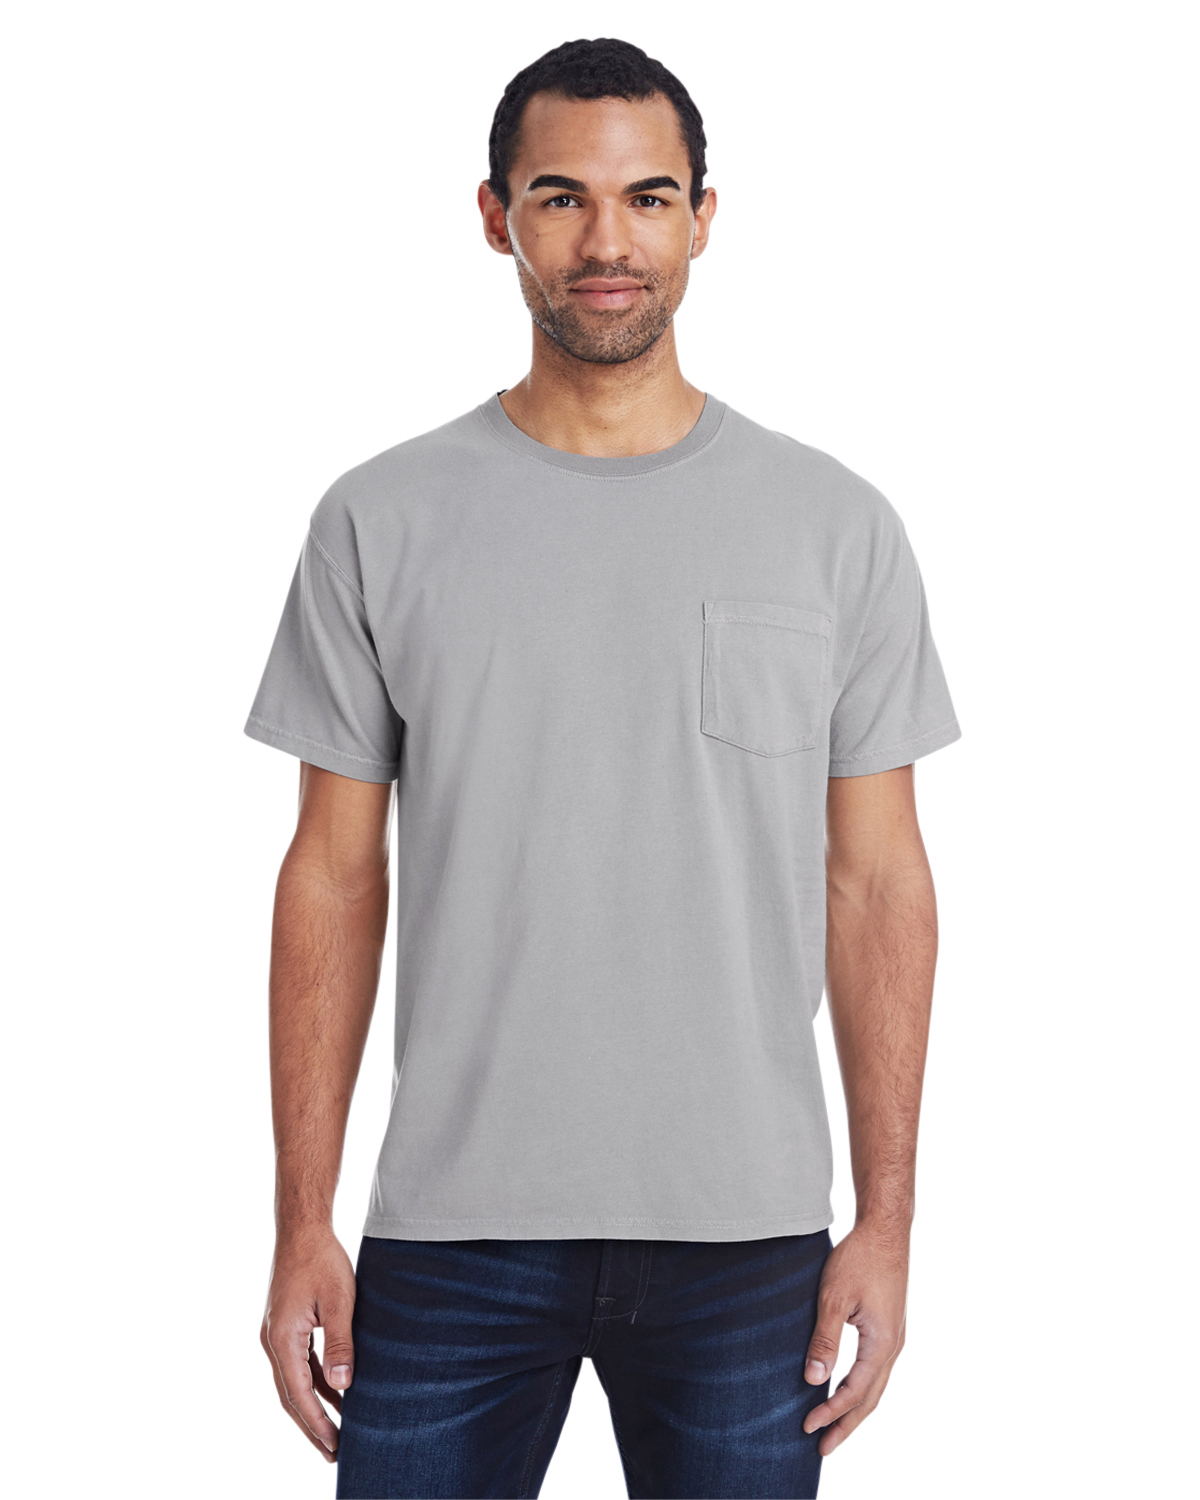 afrikansk sortere Uplifted Hanes ComfortWash GDH150 - Garment Dyed Short Sleeve T-Shirt With a Pocket  $9.22 - T-Shirts